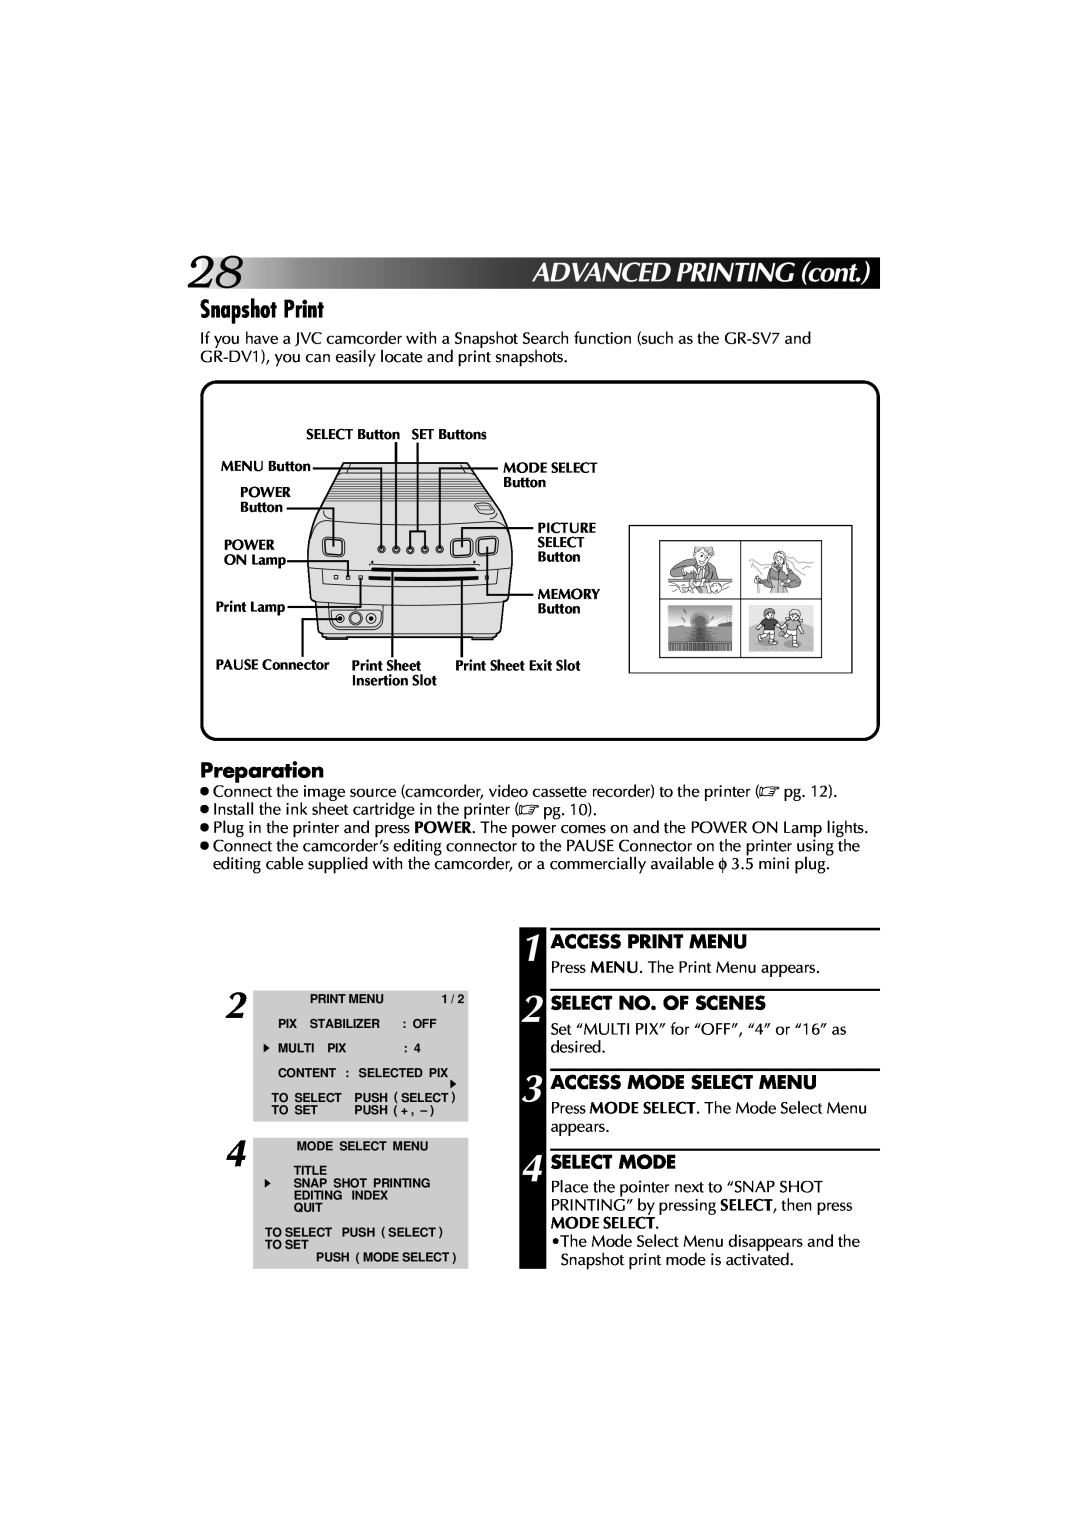 JVC GV-PT1 manual Snapshot Print, ADVANCEDPRINTINGcont, Preparation 